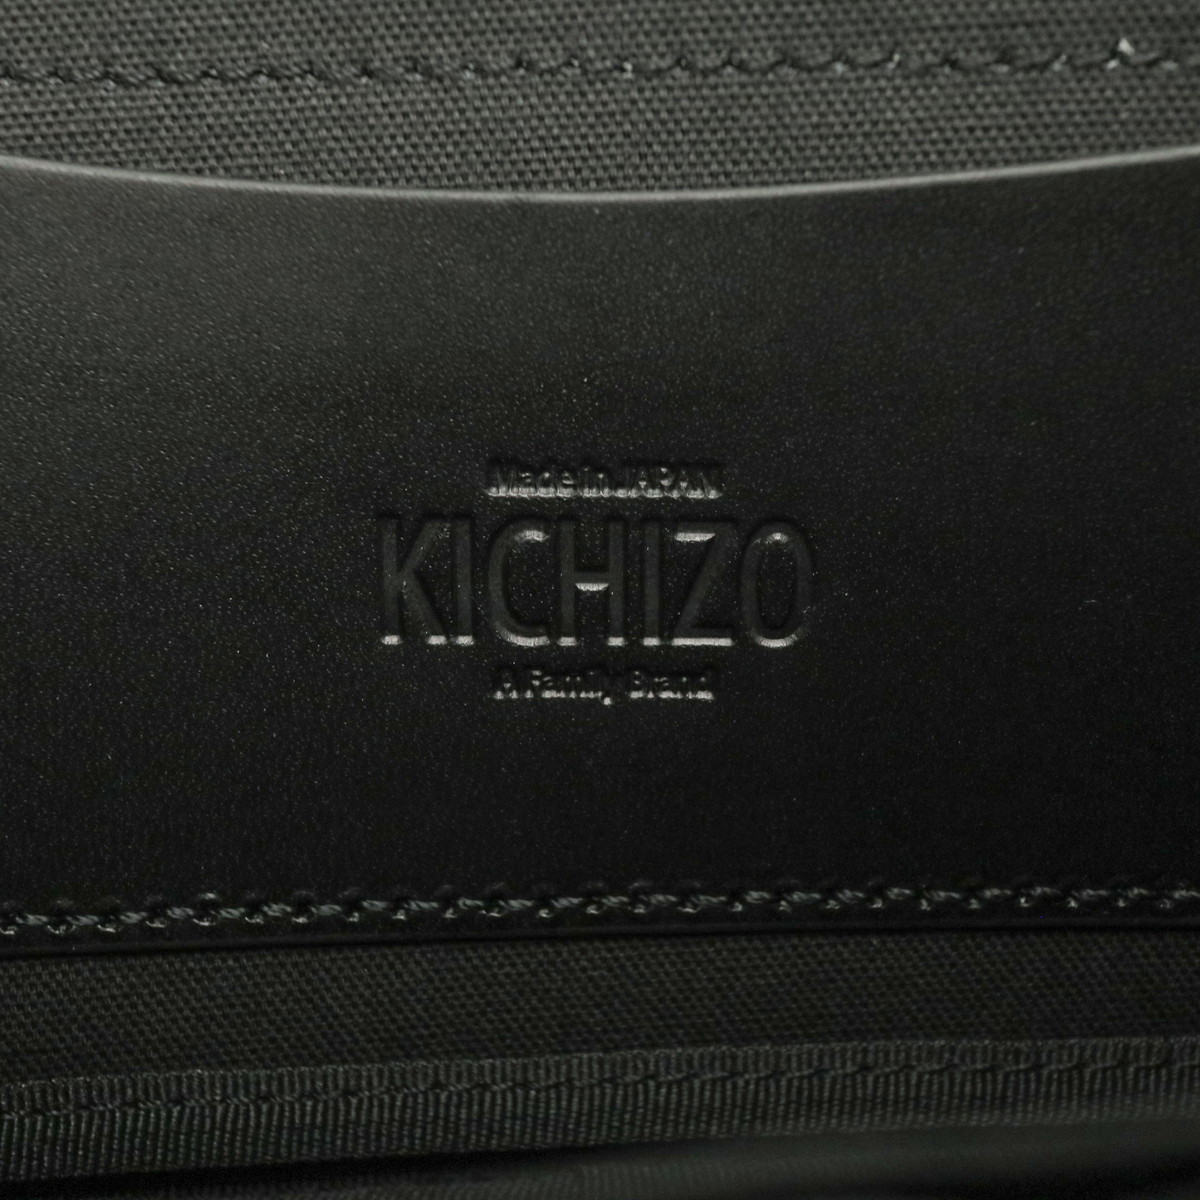 KICHIZO by Porter Classic キチゾウ バイ ポータークラシック KICHIZO CANVAS WALLET POUCH  KC-001-153